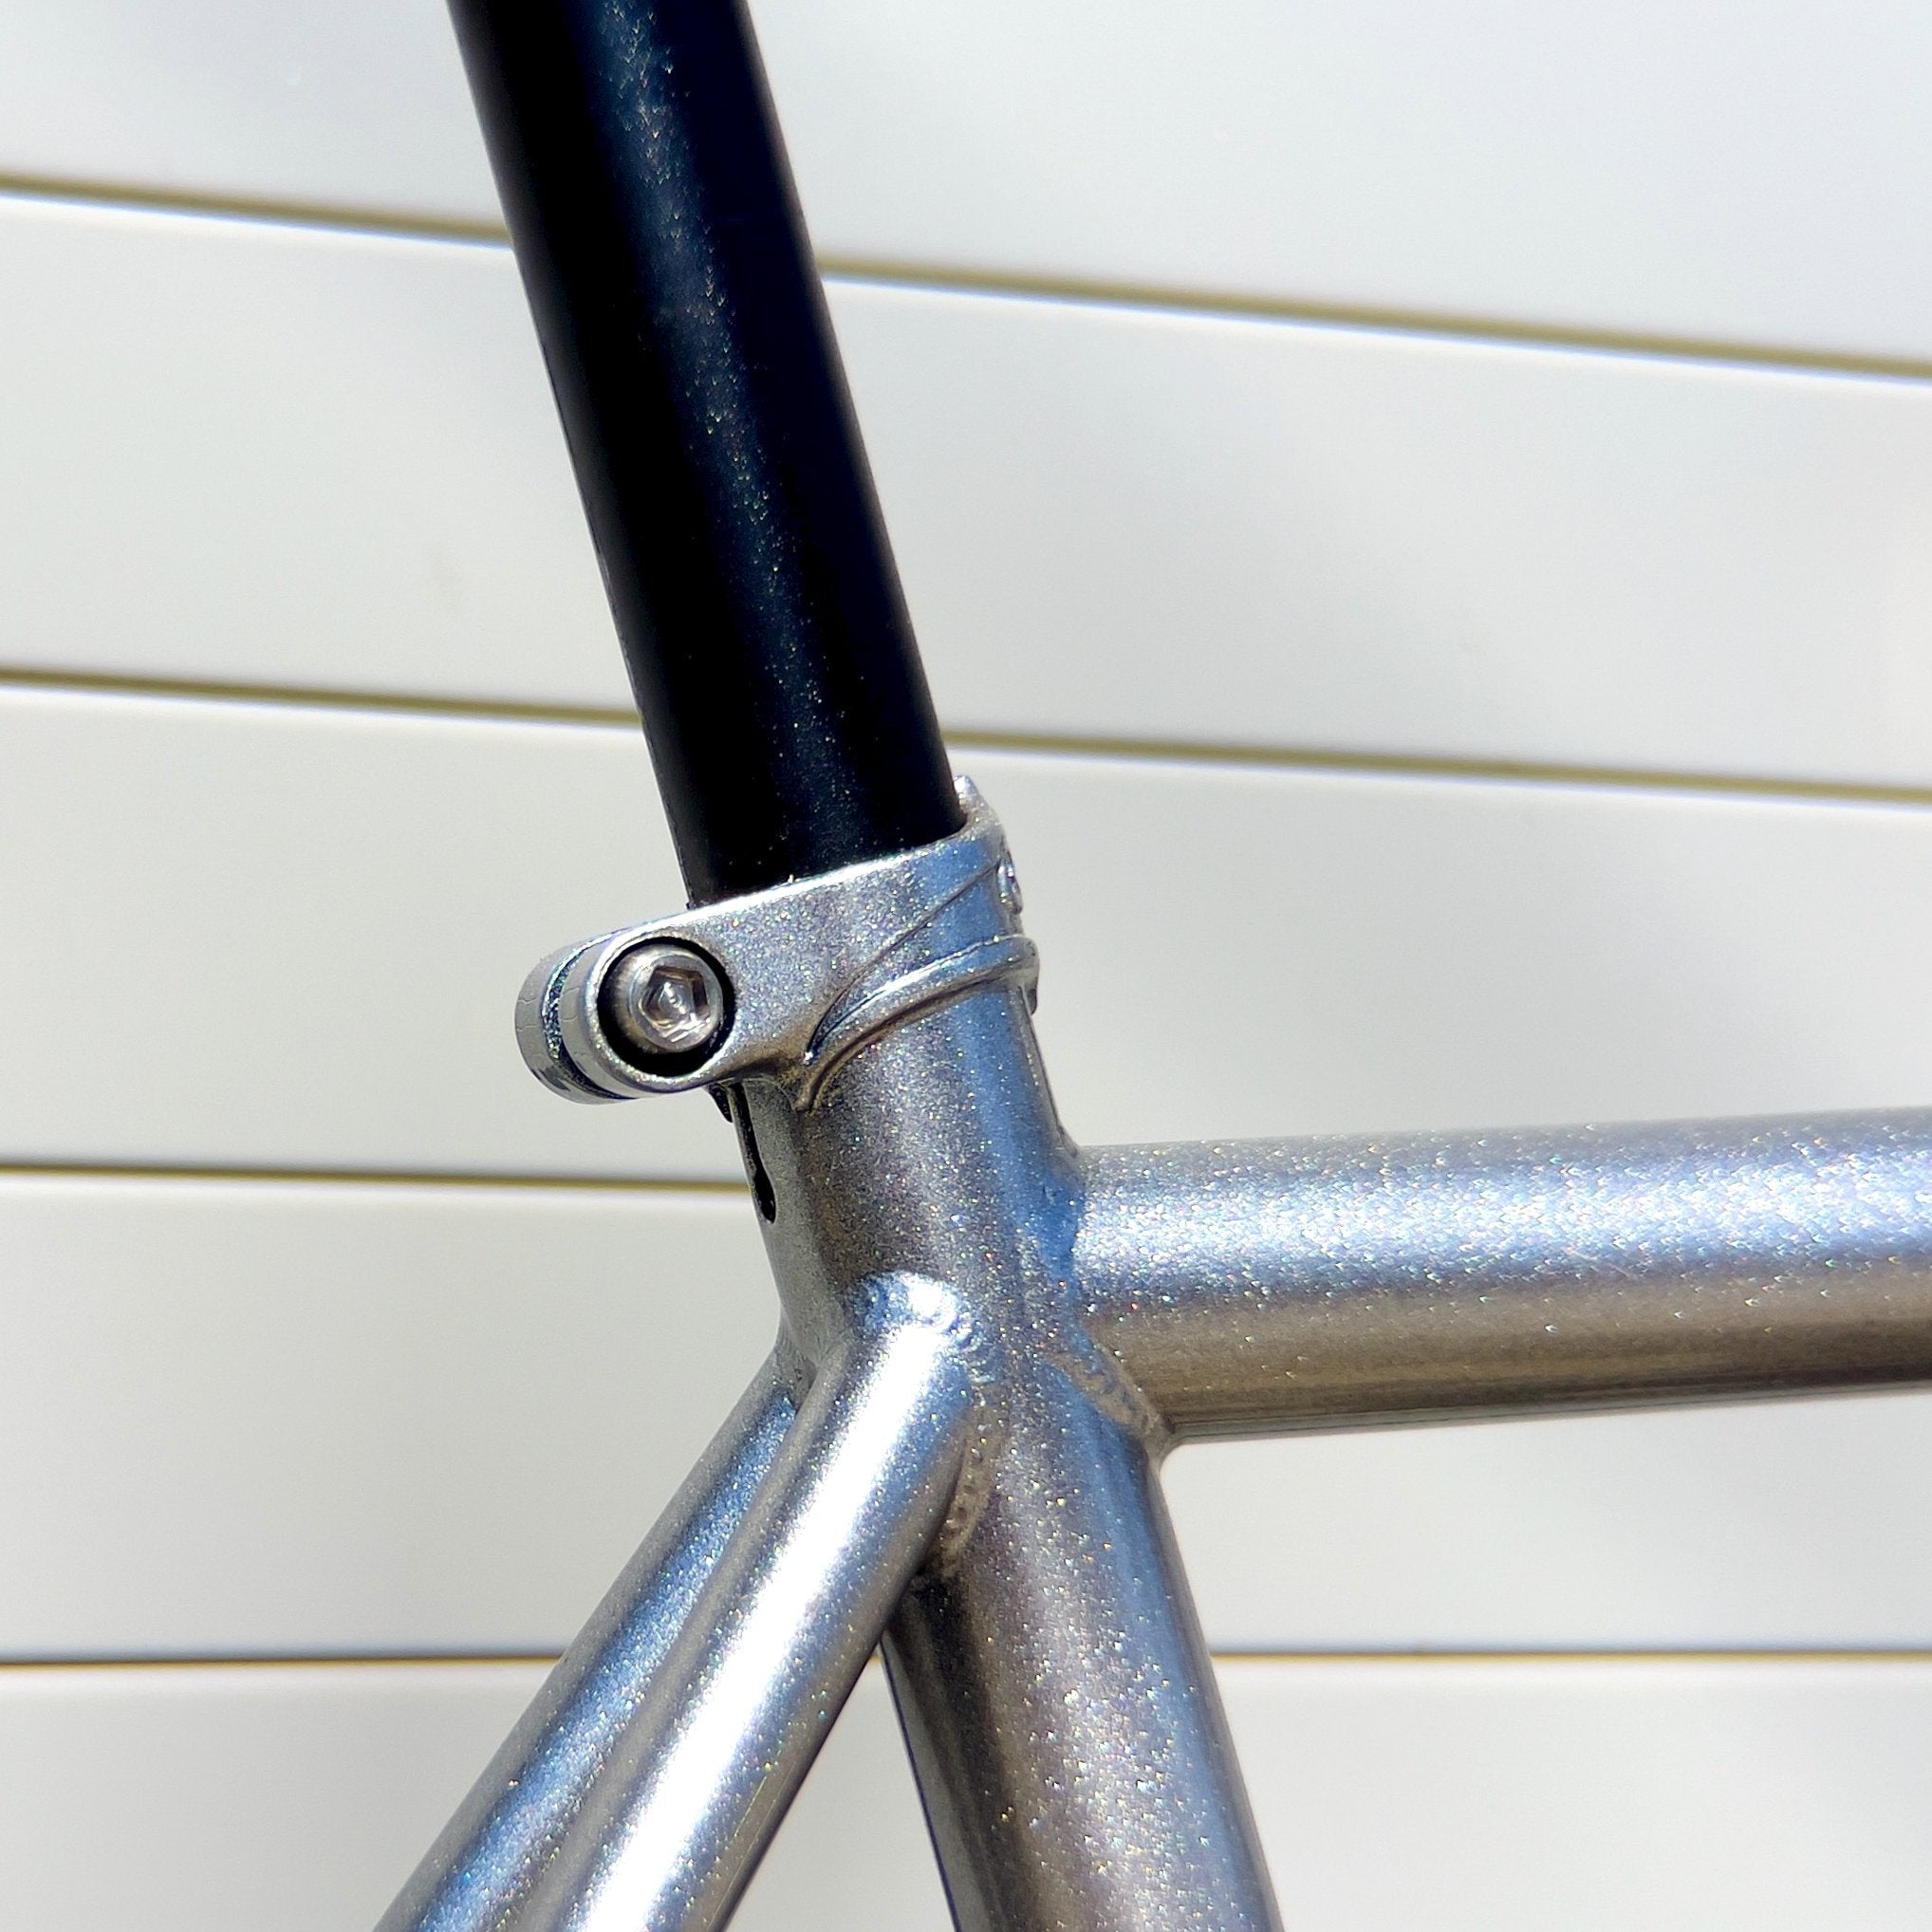 19mm Penta Pin Seatpost Binder - Bicycle Bolts